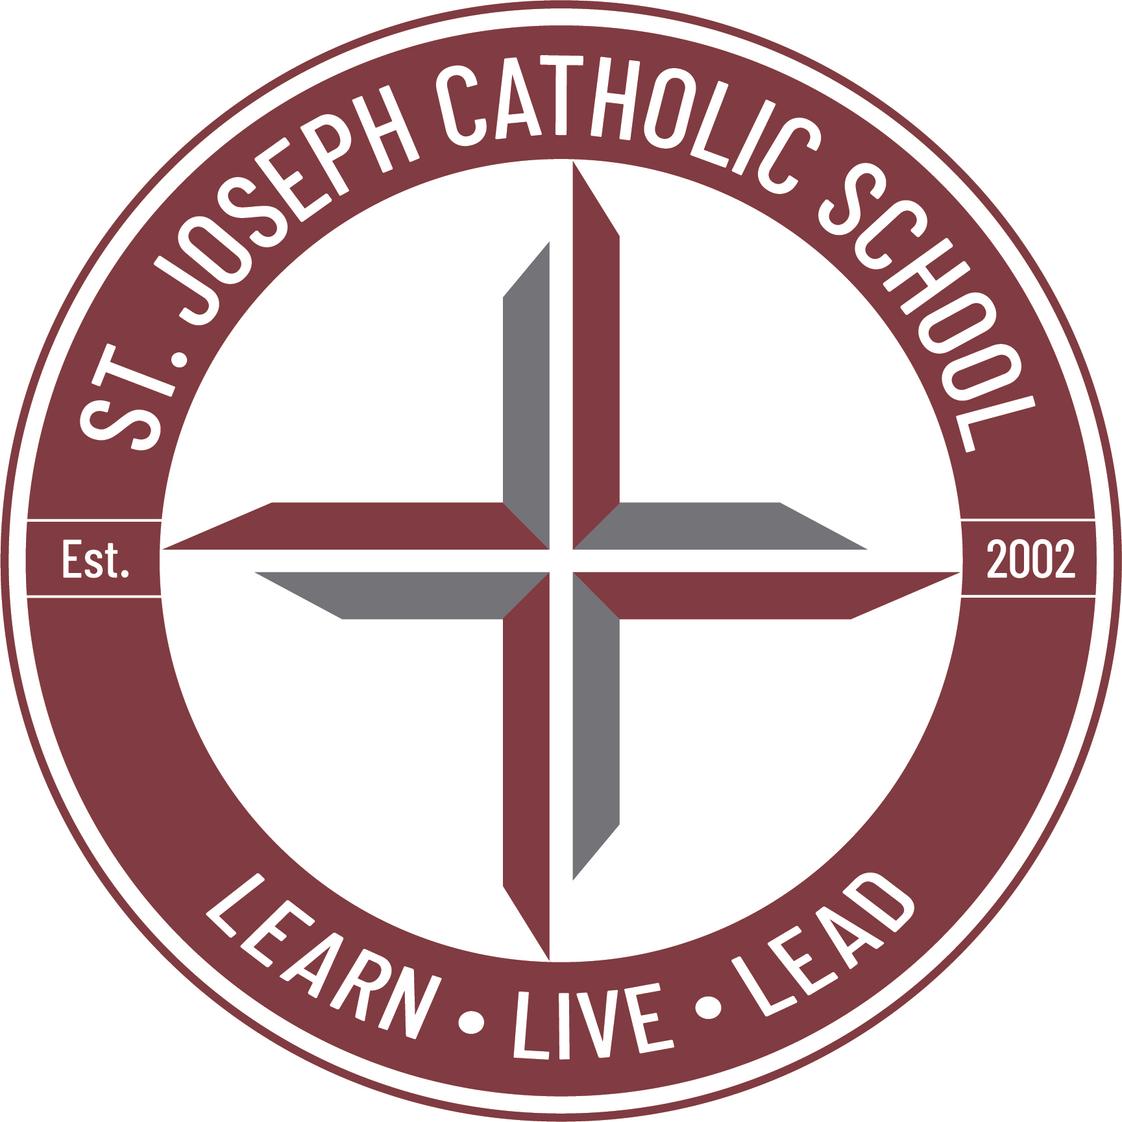 St. Joseph Catholic School (Top Ranked Private School for 2024